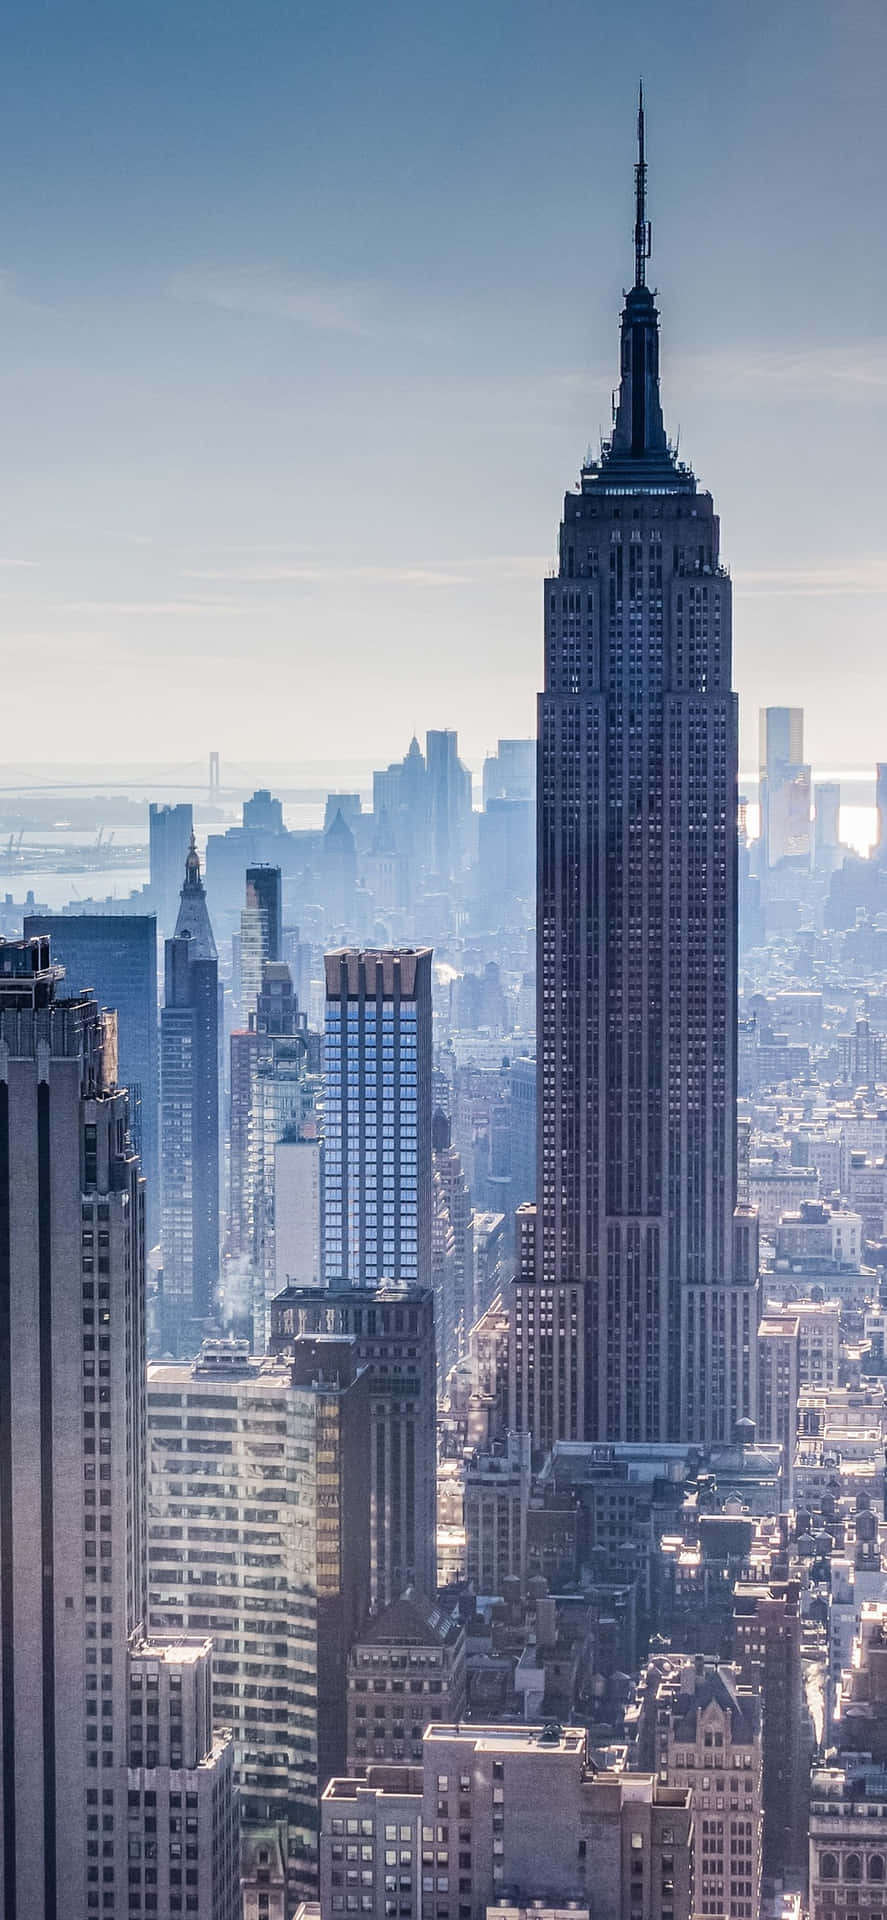 Iphonex Bakgrund Med Höga Torn I New York, Inklusive Empire State Building.